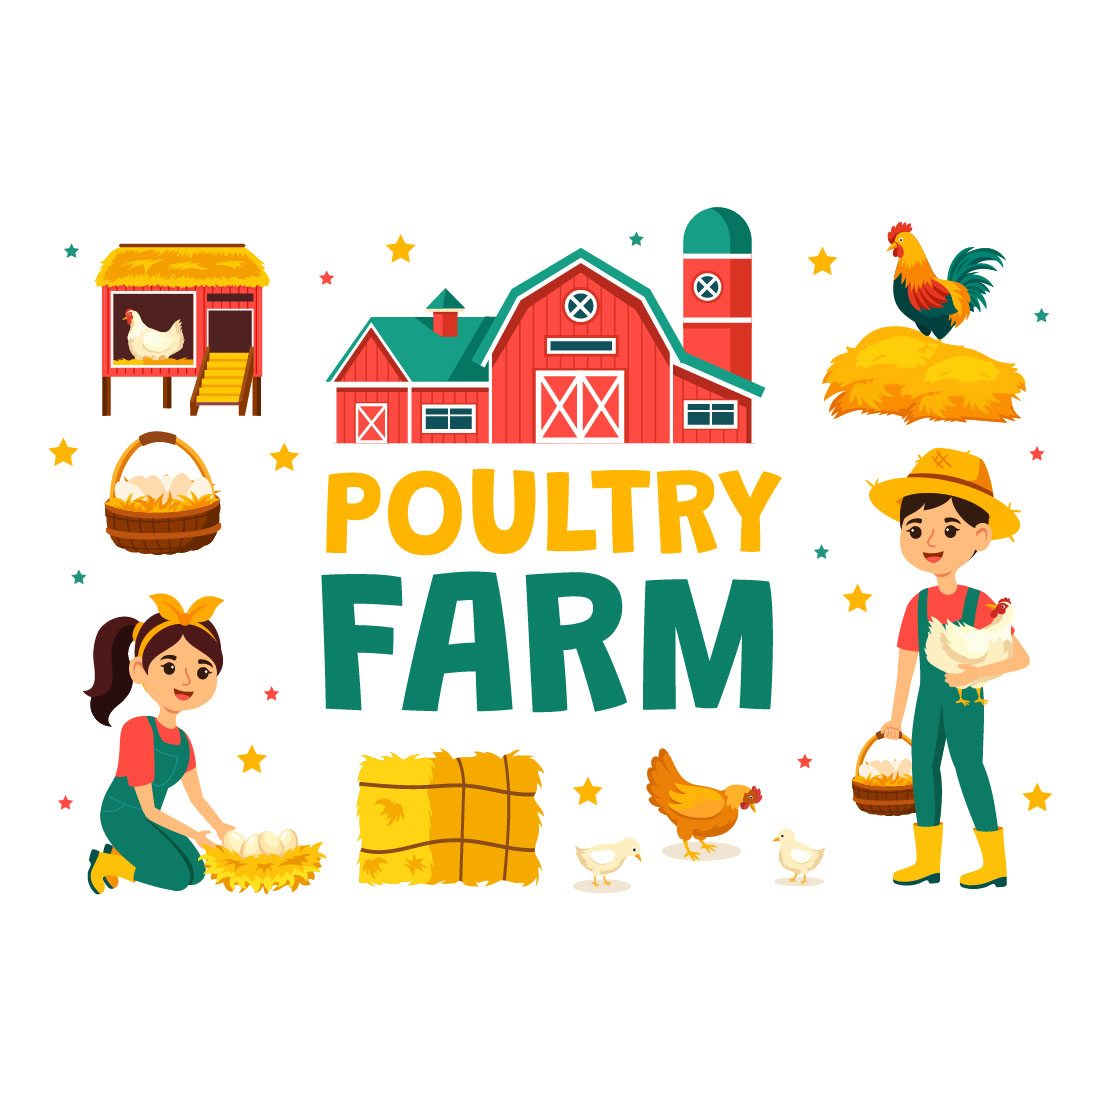 12 Poultry Farm Illustration preview image.